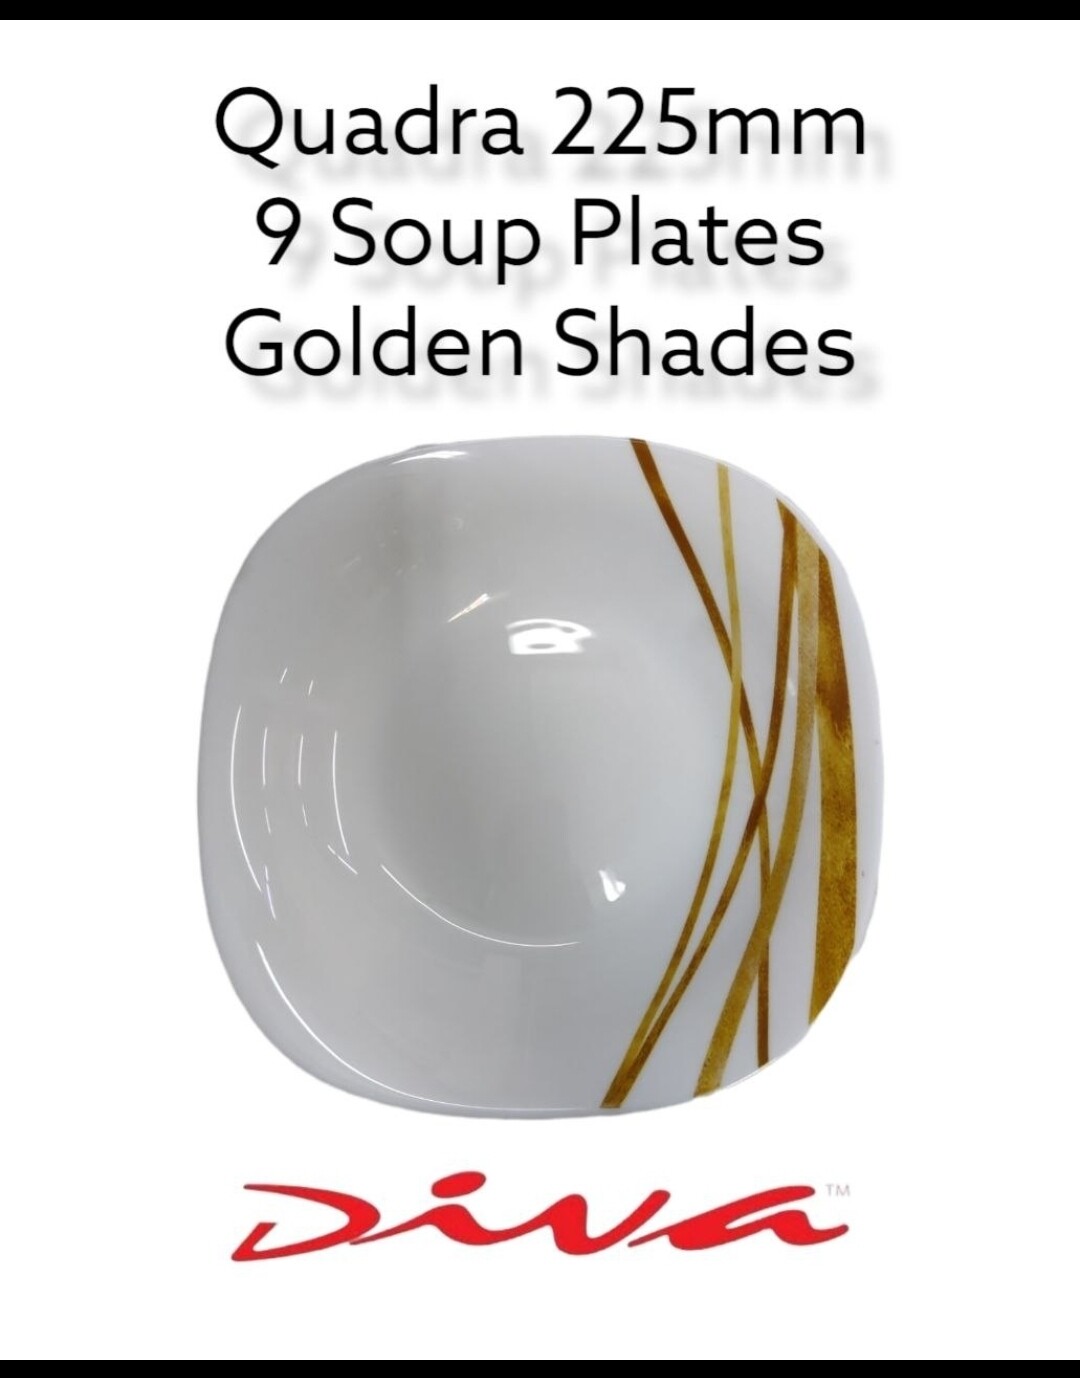 Diva 9 Quadra Square Soup Plates Golden Shades 3pcs